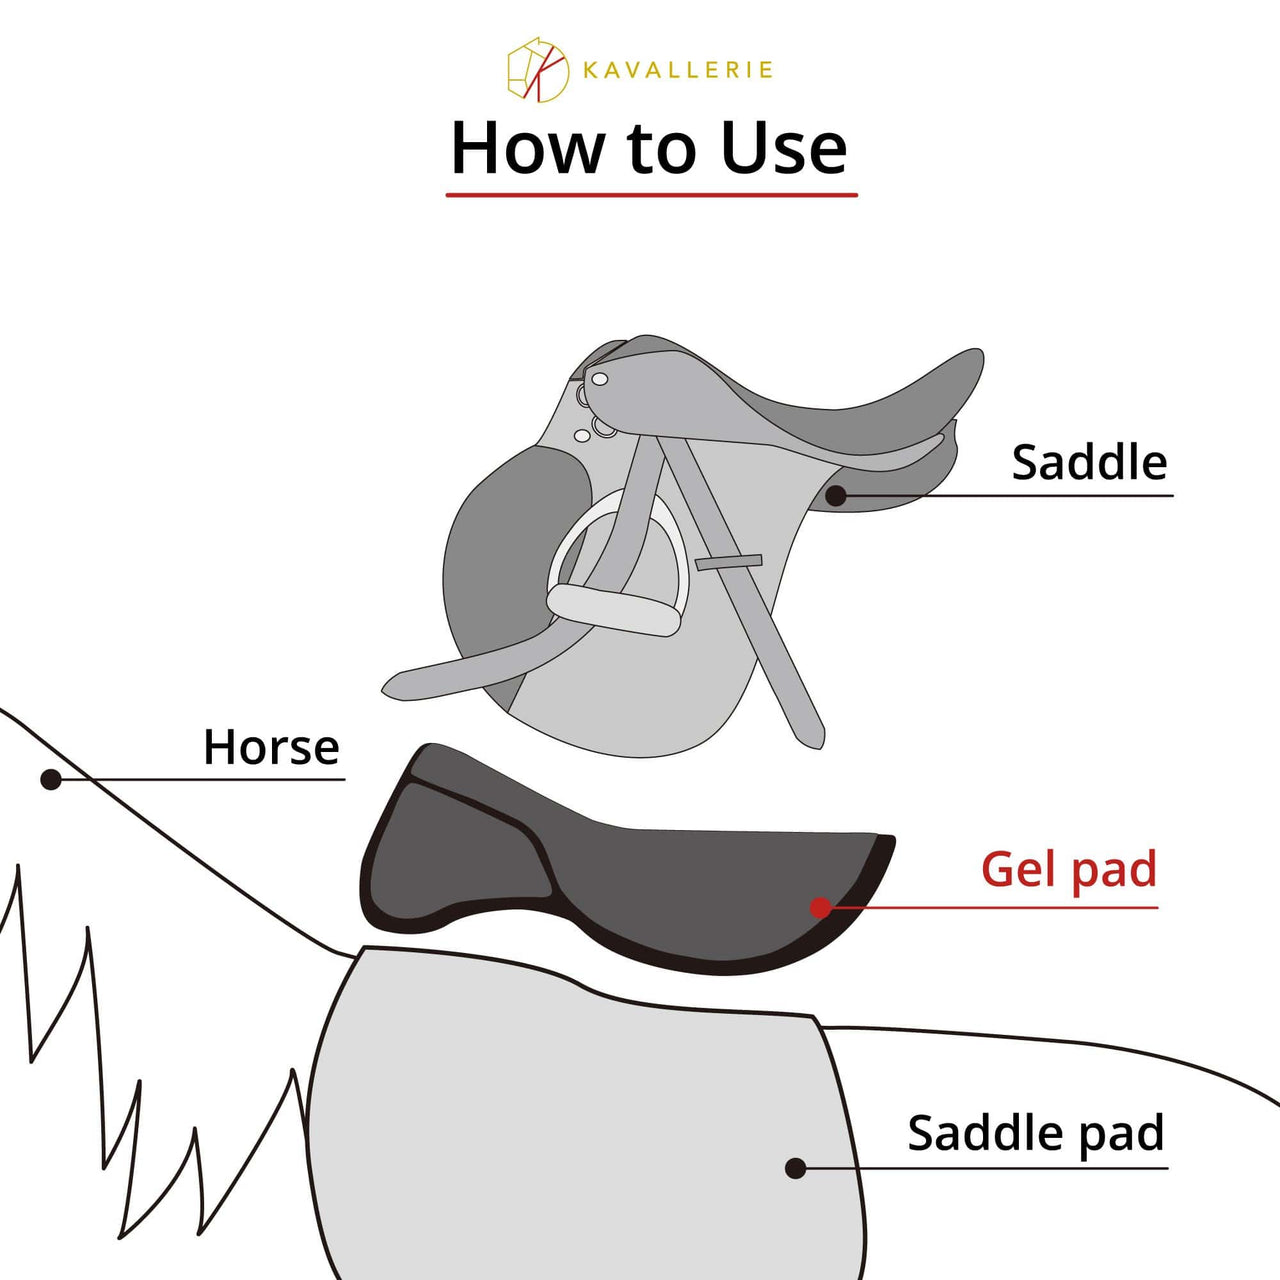 Seat Saver Anti-Slip Gel Pad - Kavallerie